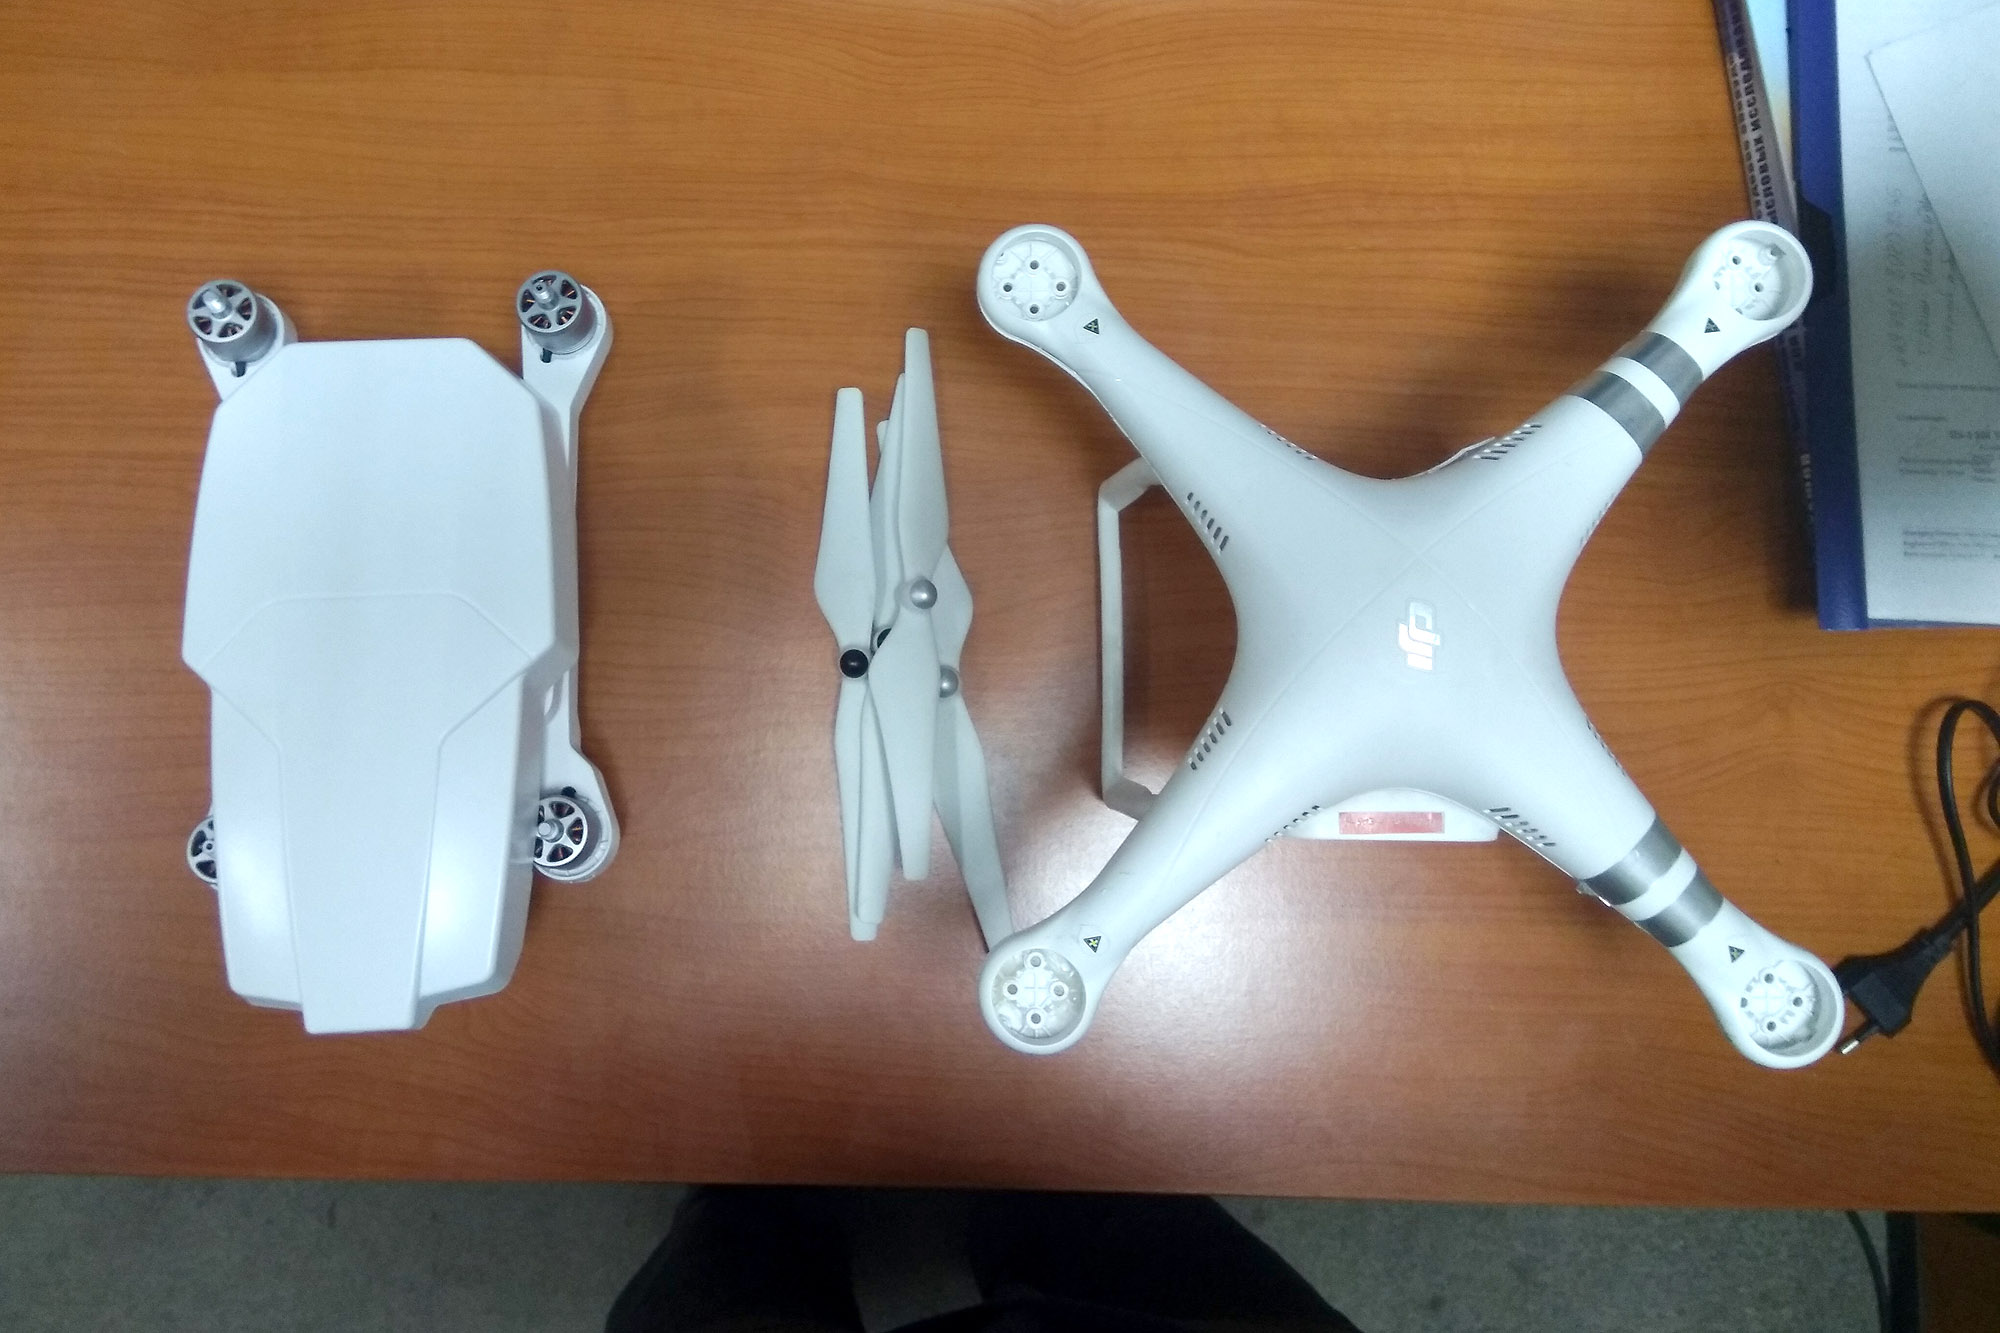 Nacome Phantom 3 Foldable Body Case for Changing Phantom 3 to Another Drone Like DJI Mavic Function Keep Same Use The Same transmitte